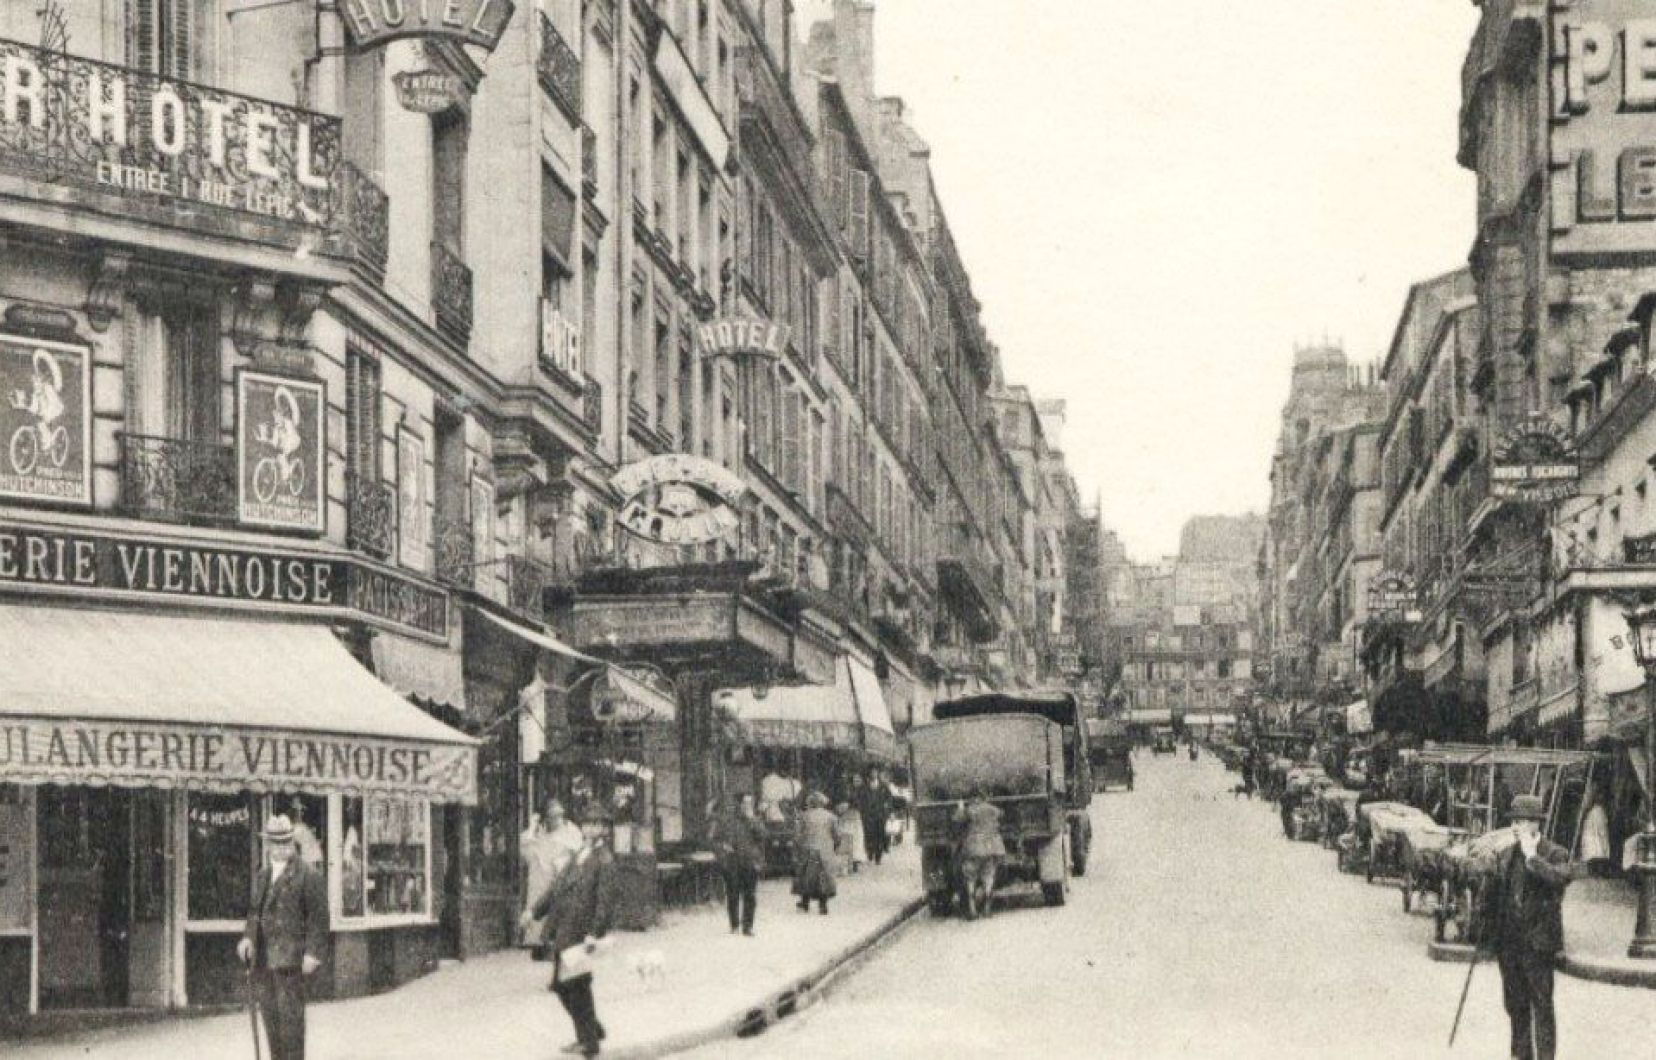 Нажмите для увеличения. Париж в 1920-ые. Фото сайта:https://media2.ledevoir.com/images_galerie/nwd_516889_372422/image.jpg?ts=1495218603 